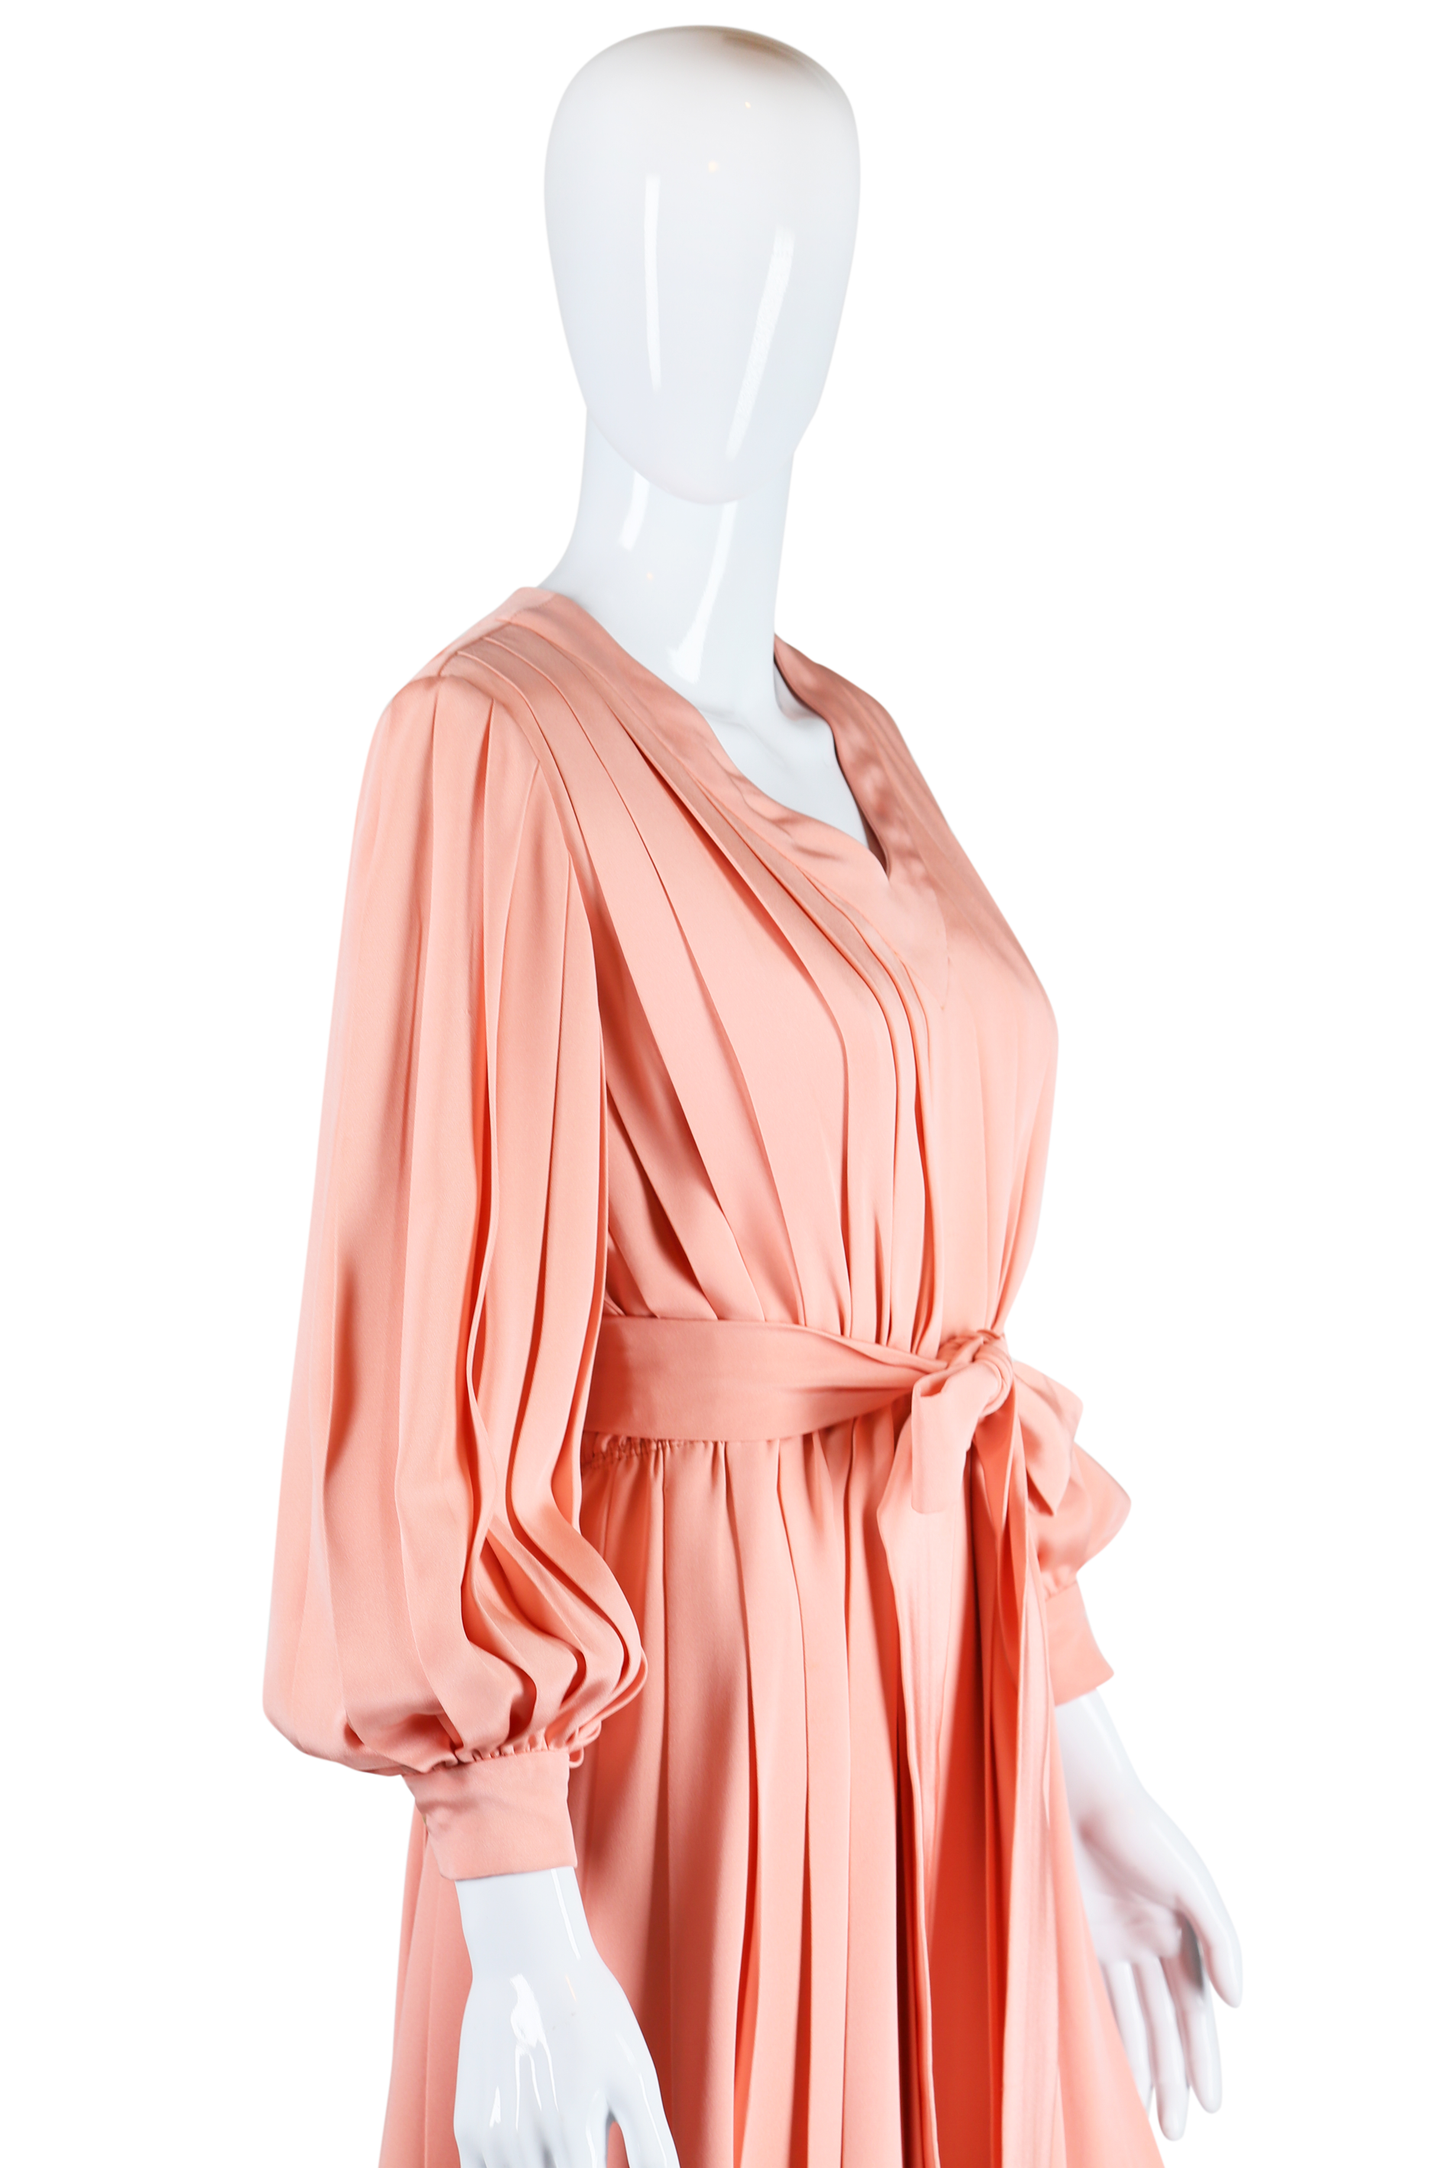 Bill Blass Pink Pleats Dress - Embers / Cinders Vintage